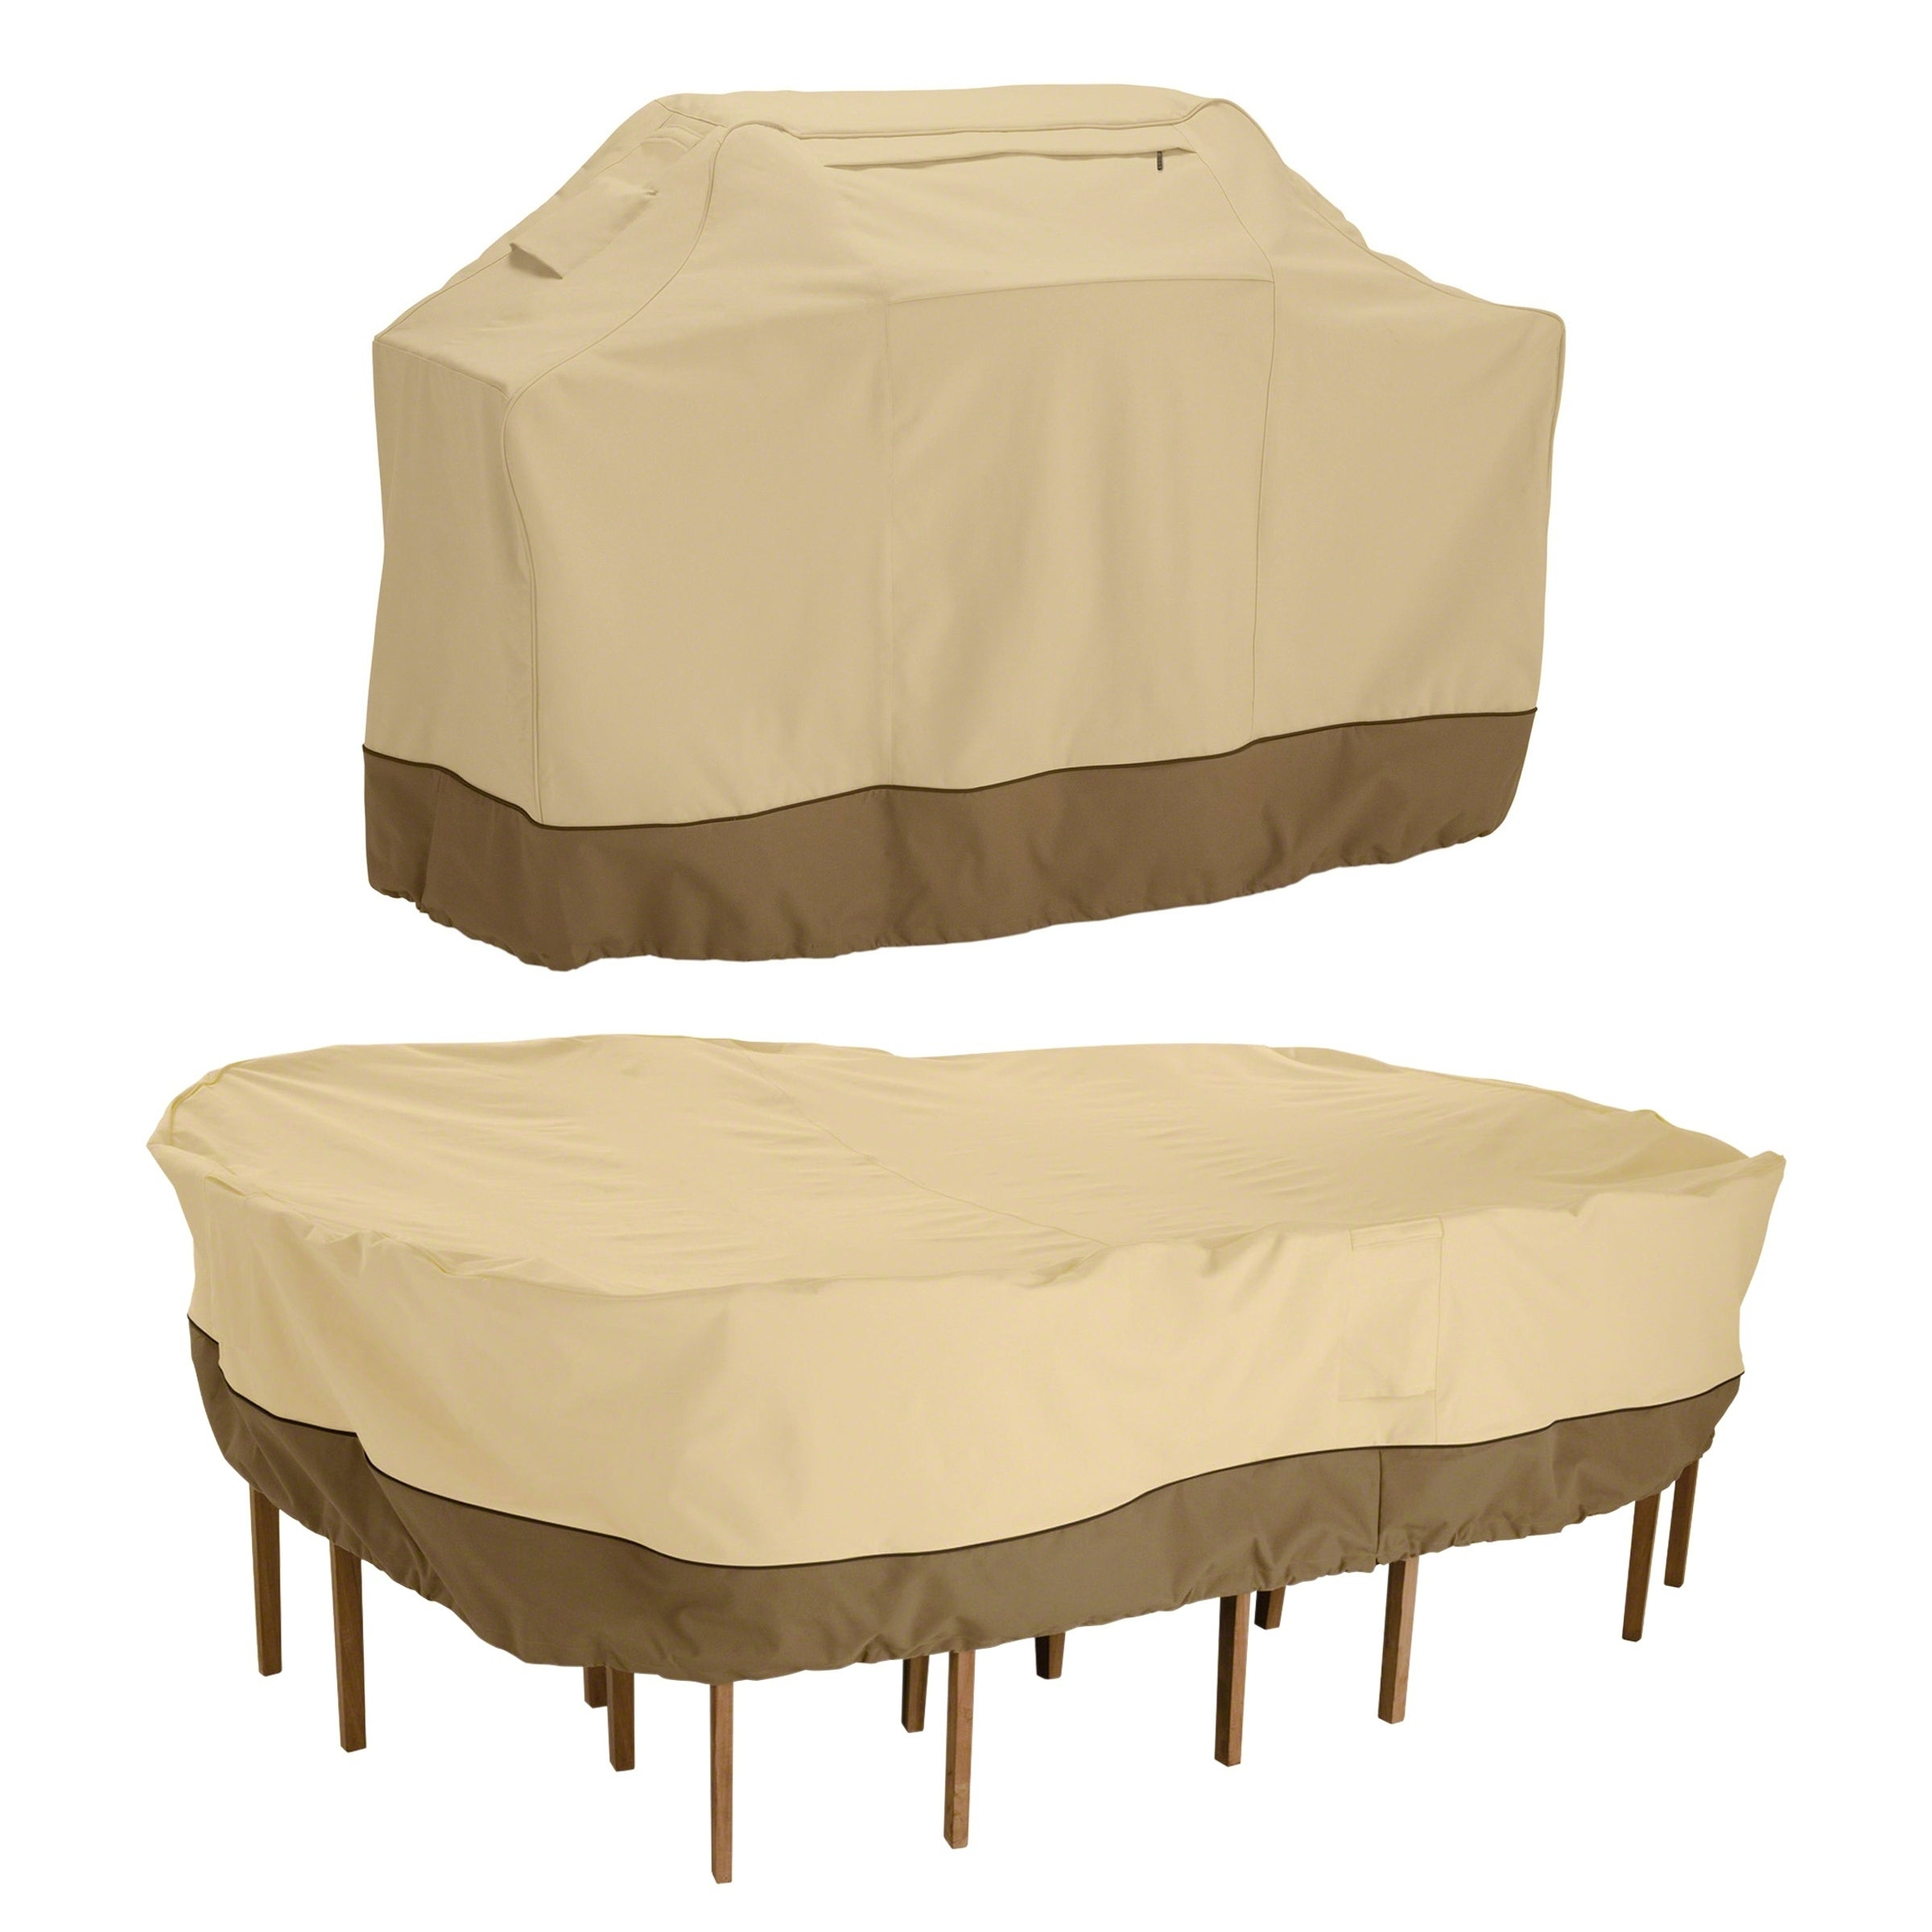 Durable And Water Resistant Outdoor Furniture Cover Medium regarding measurements 2400 X 2400